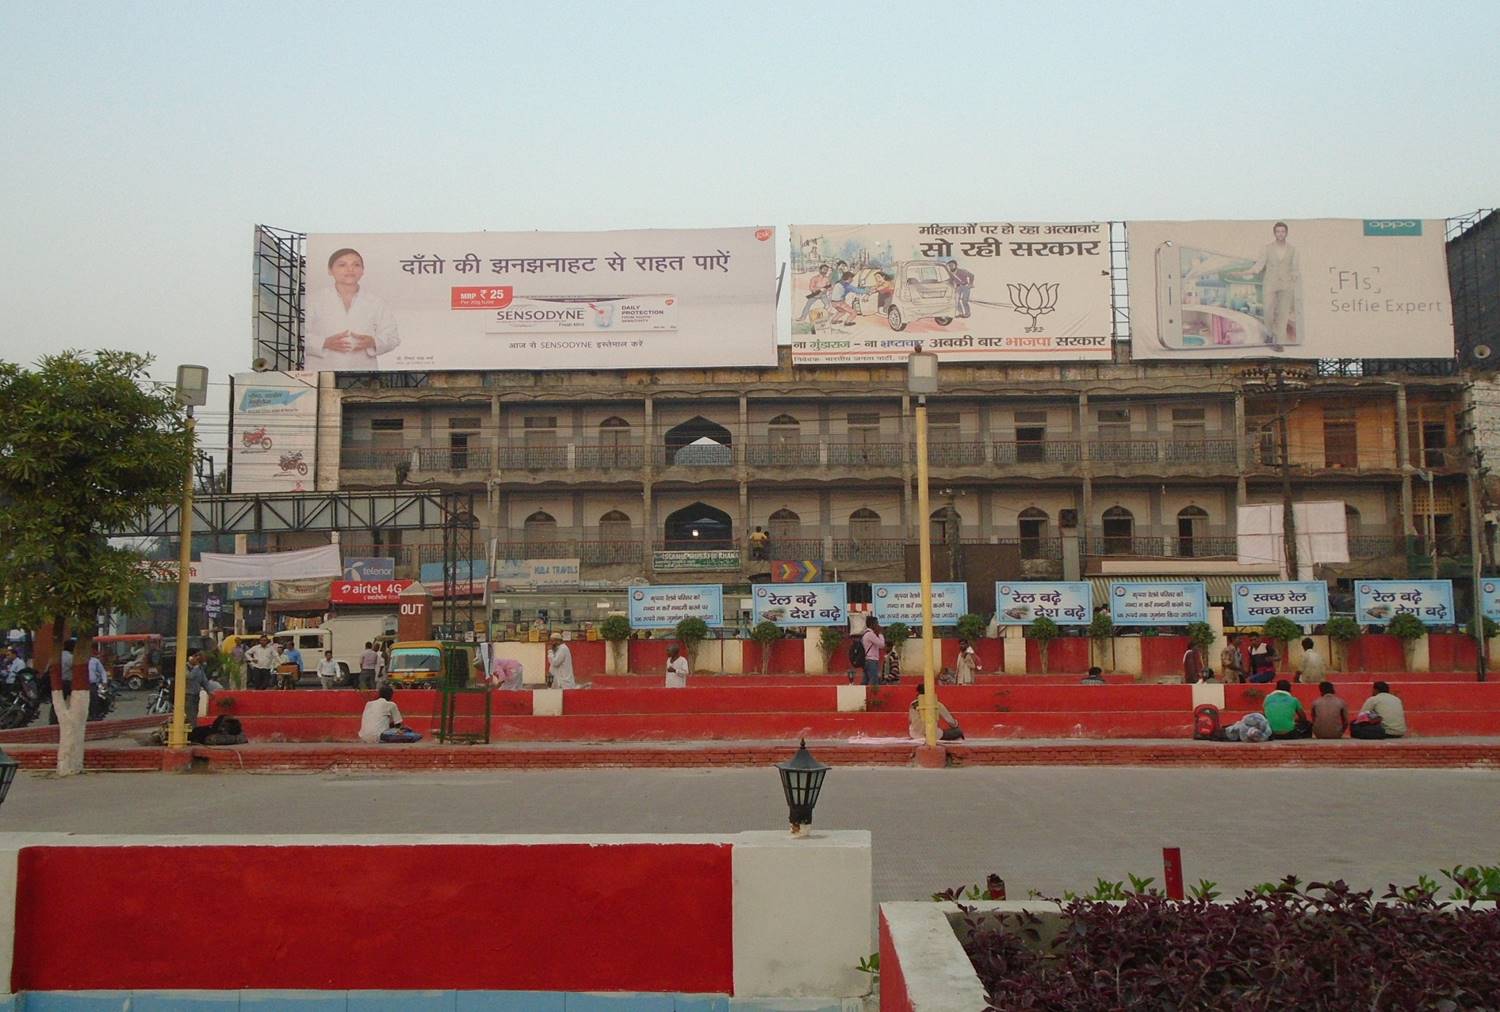 Opp. Railway Station, Moradabad